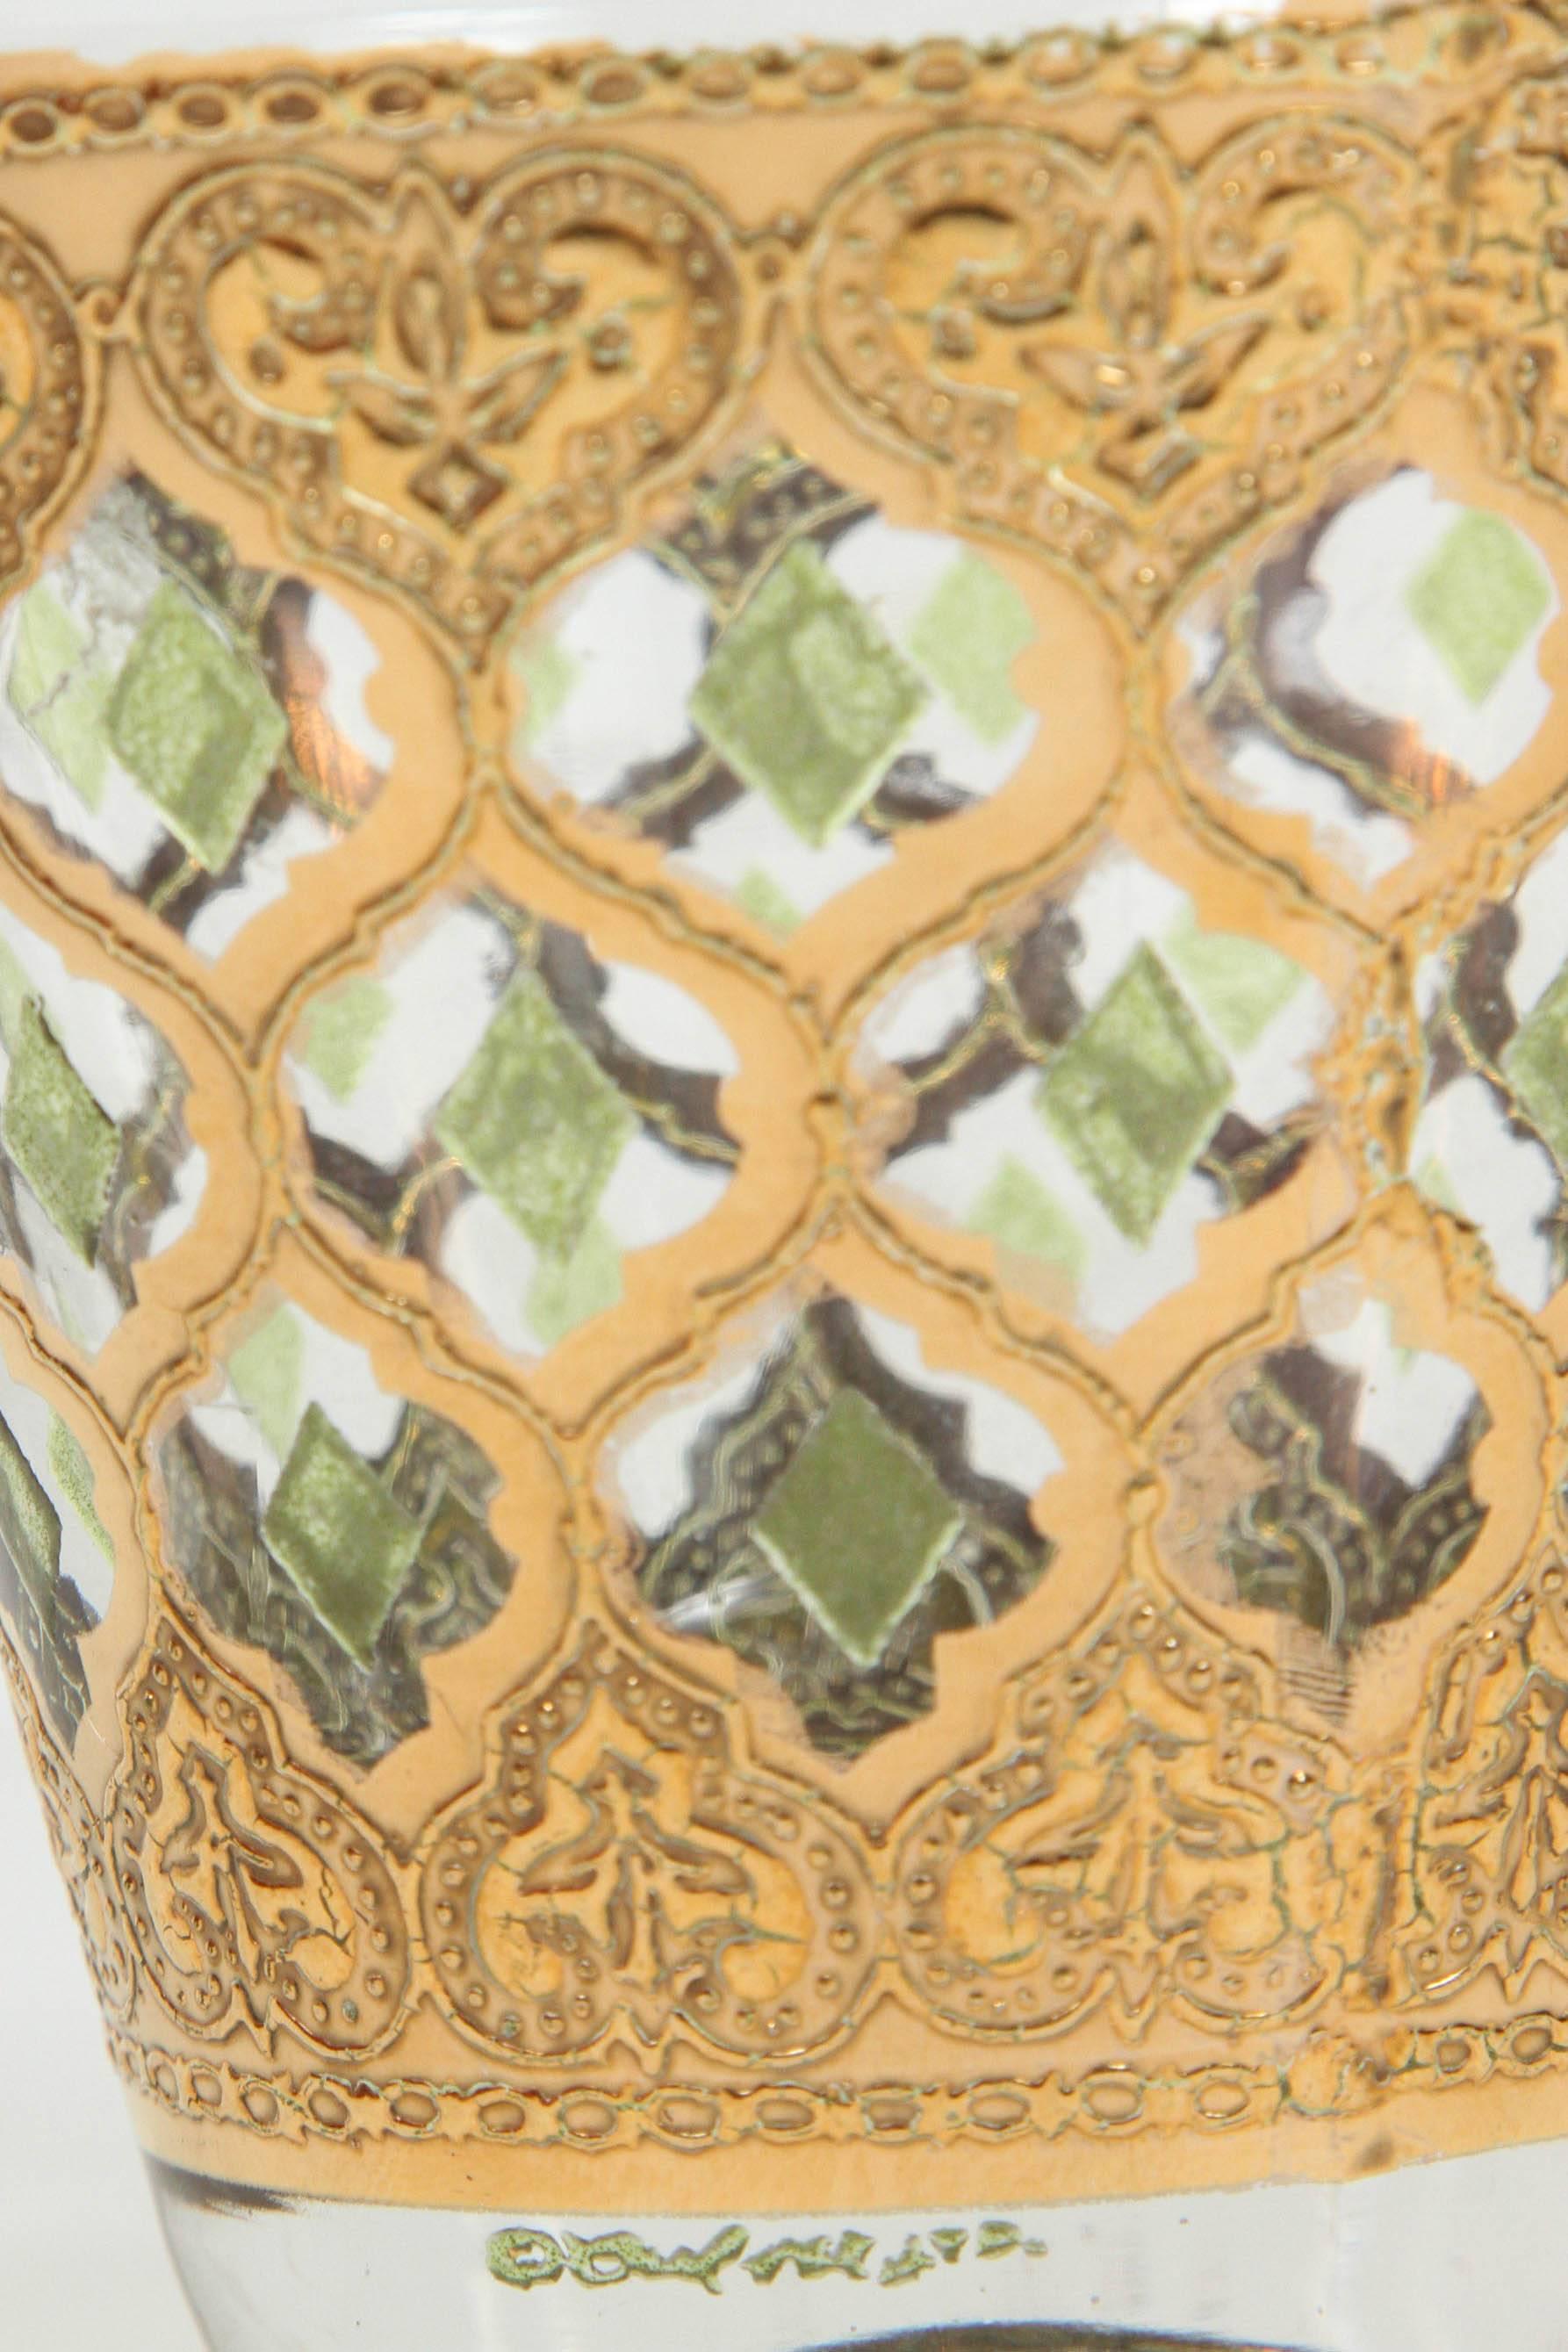 Hollywood Regency Vintage Lowball Rocks Glasses from Culver with 22 Karat Gold Designs